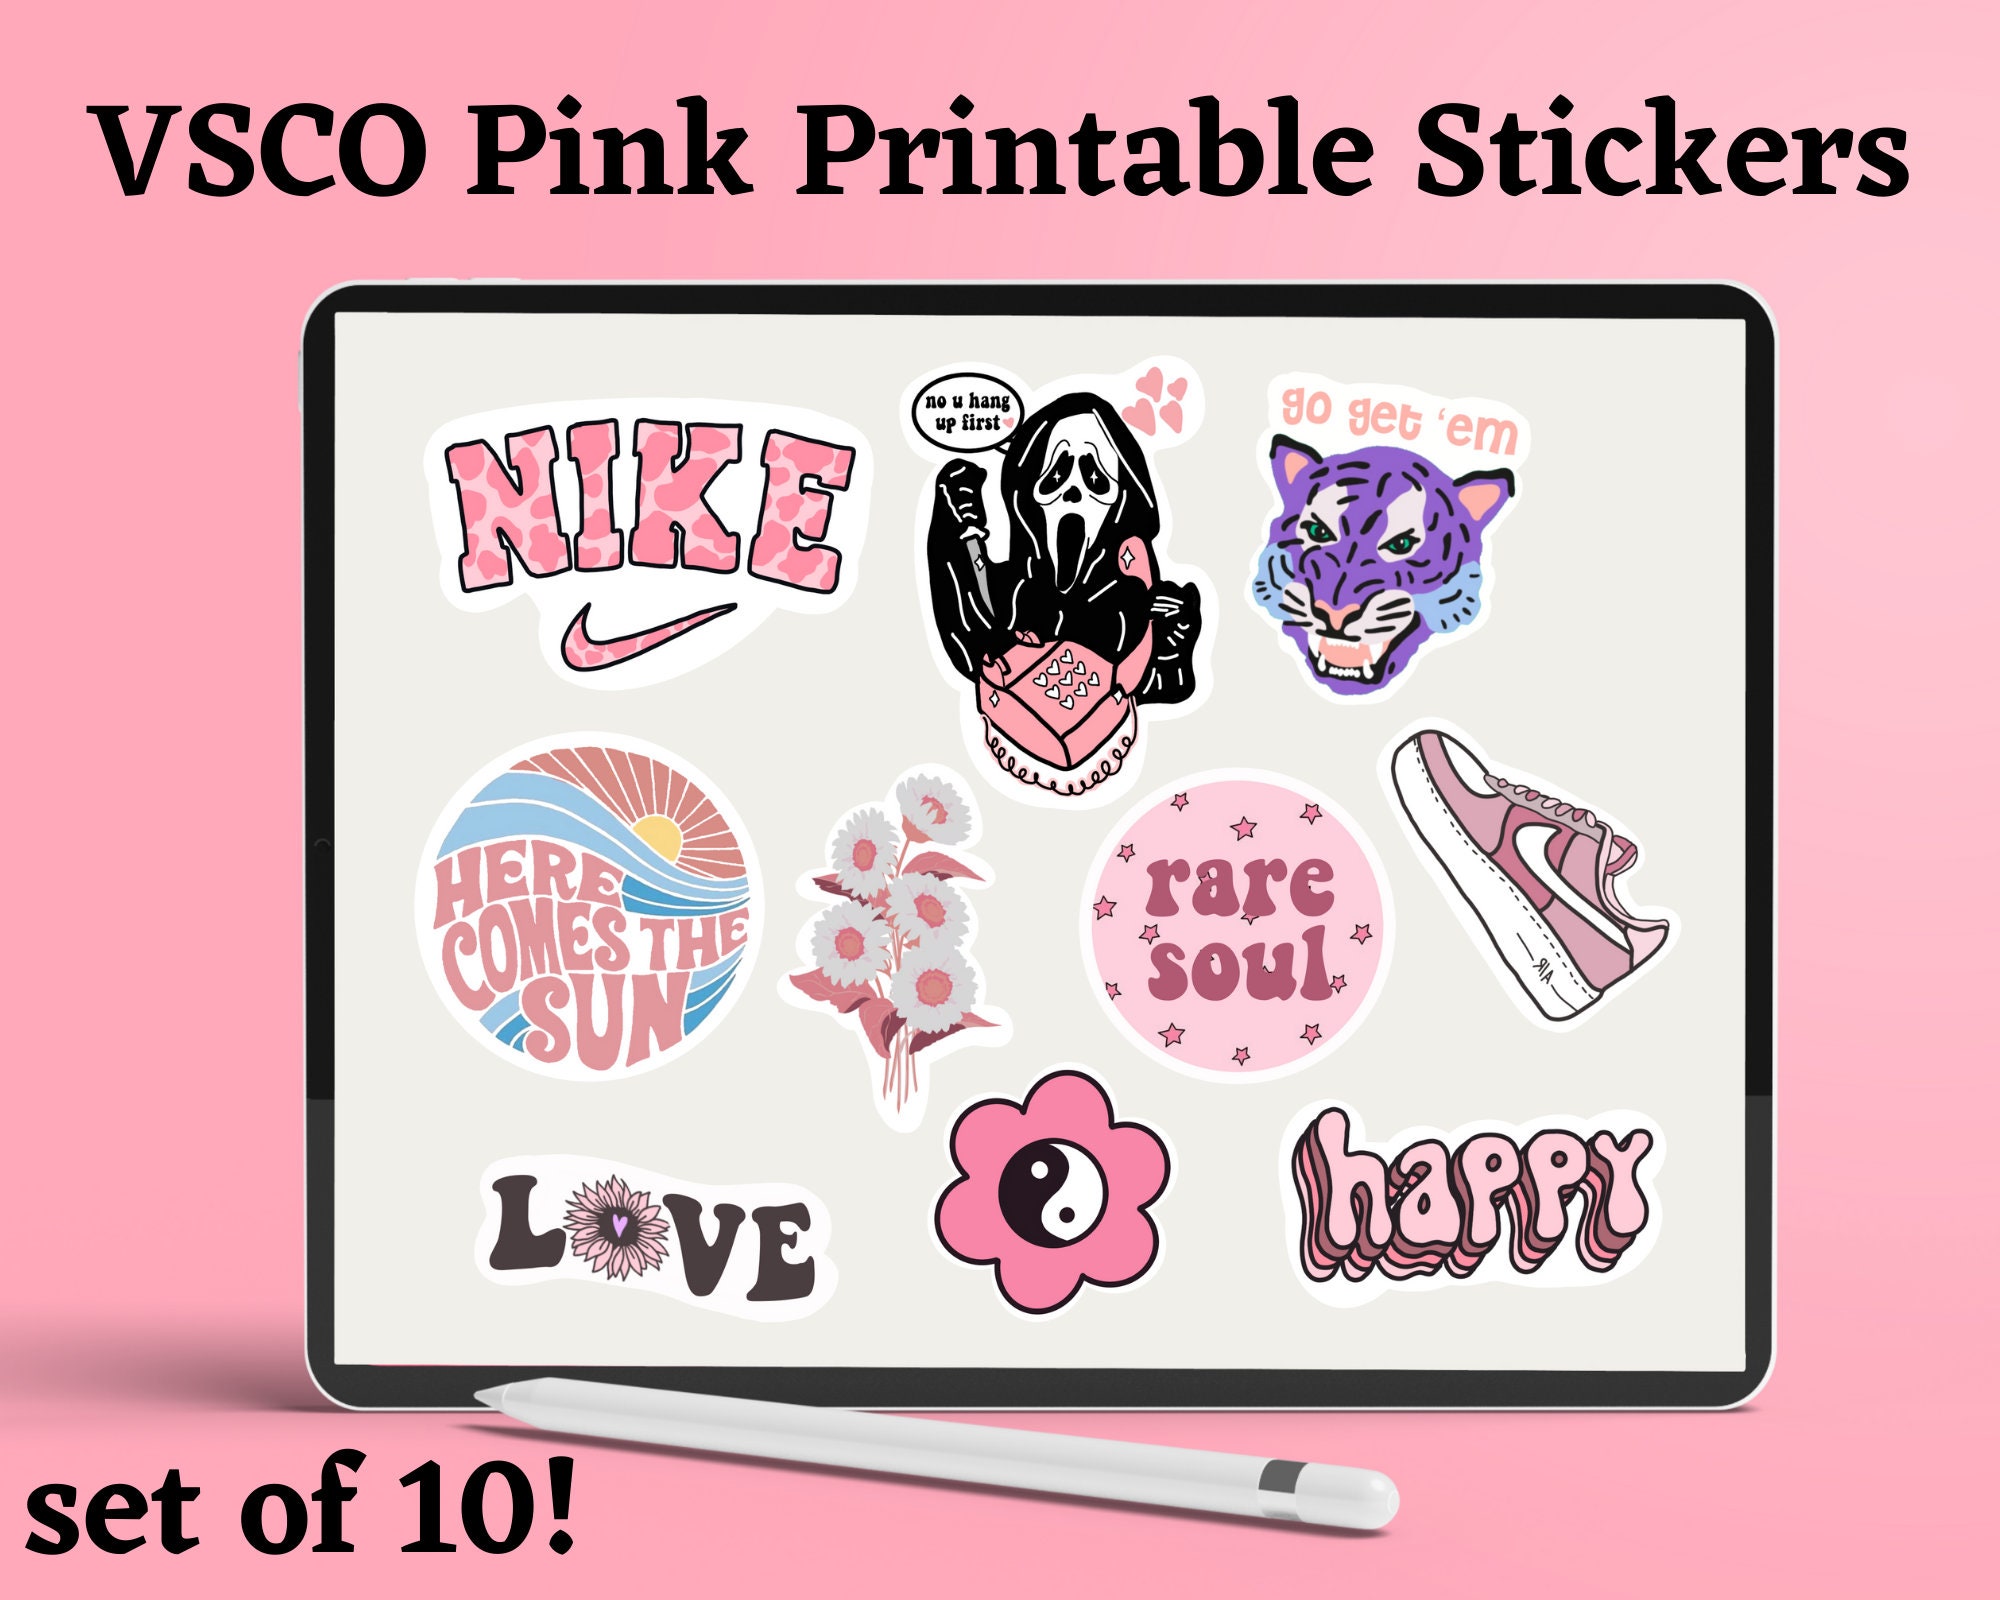 Preppy Stickers Aesthetic Stickers 50pcs, Cute Stickers Preppy Stuff Aesthetic Things for Adults Kids Girls Kechup Vinyl Waterproof Pink Stickers